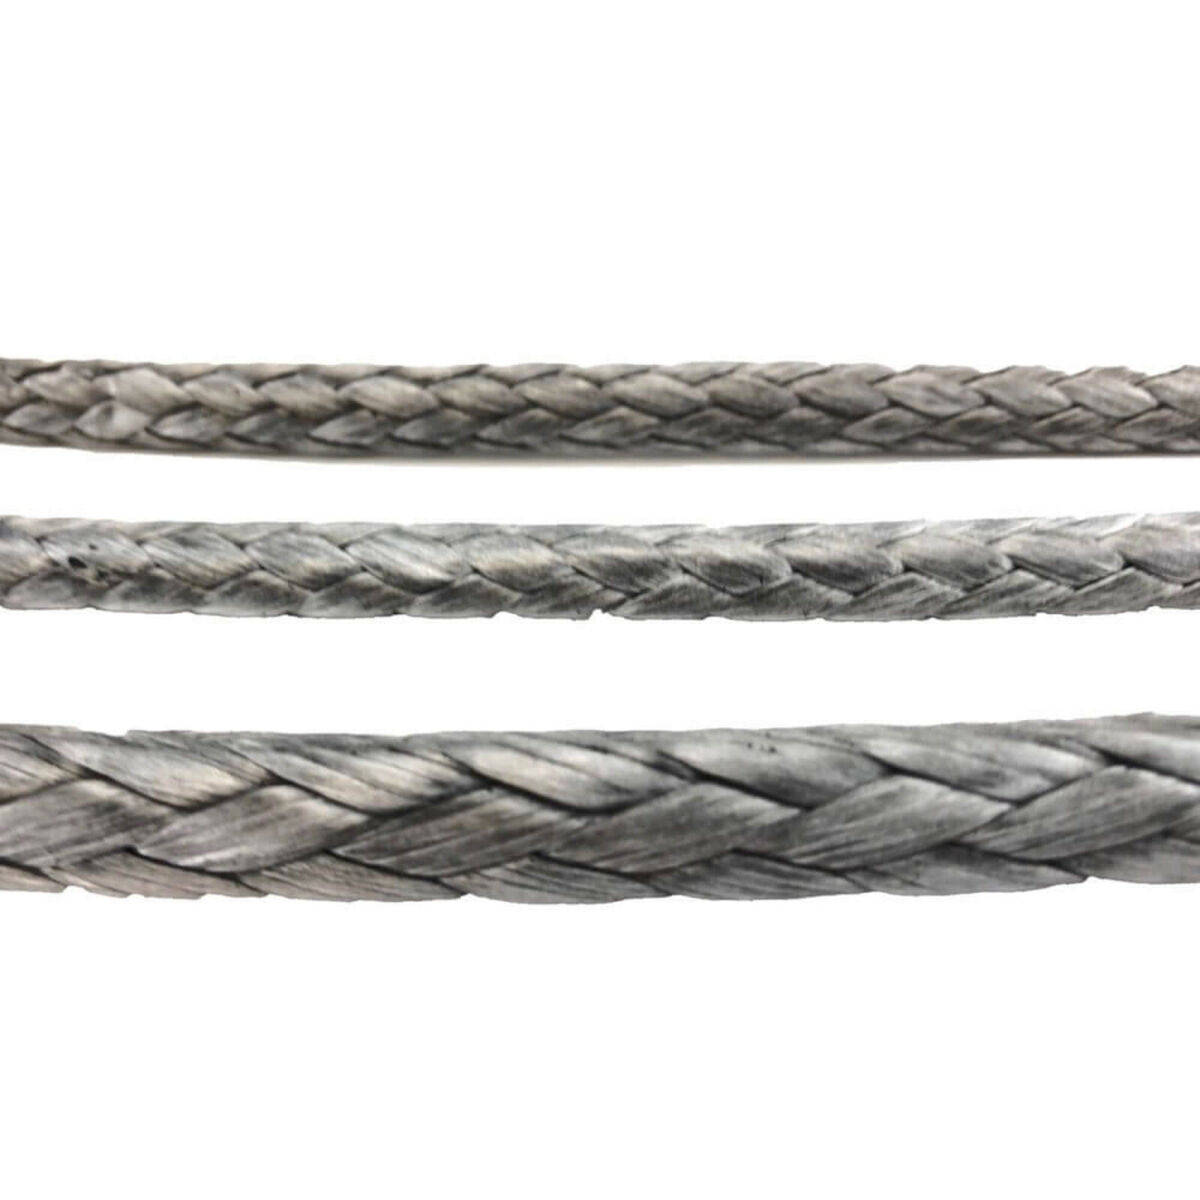 10mm Dyneema SK75 12 Strand High Strength Rope - Select Length